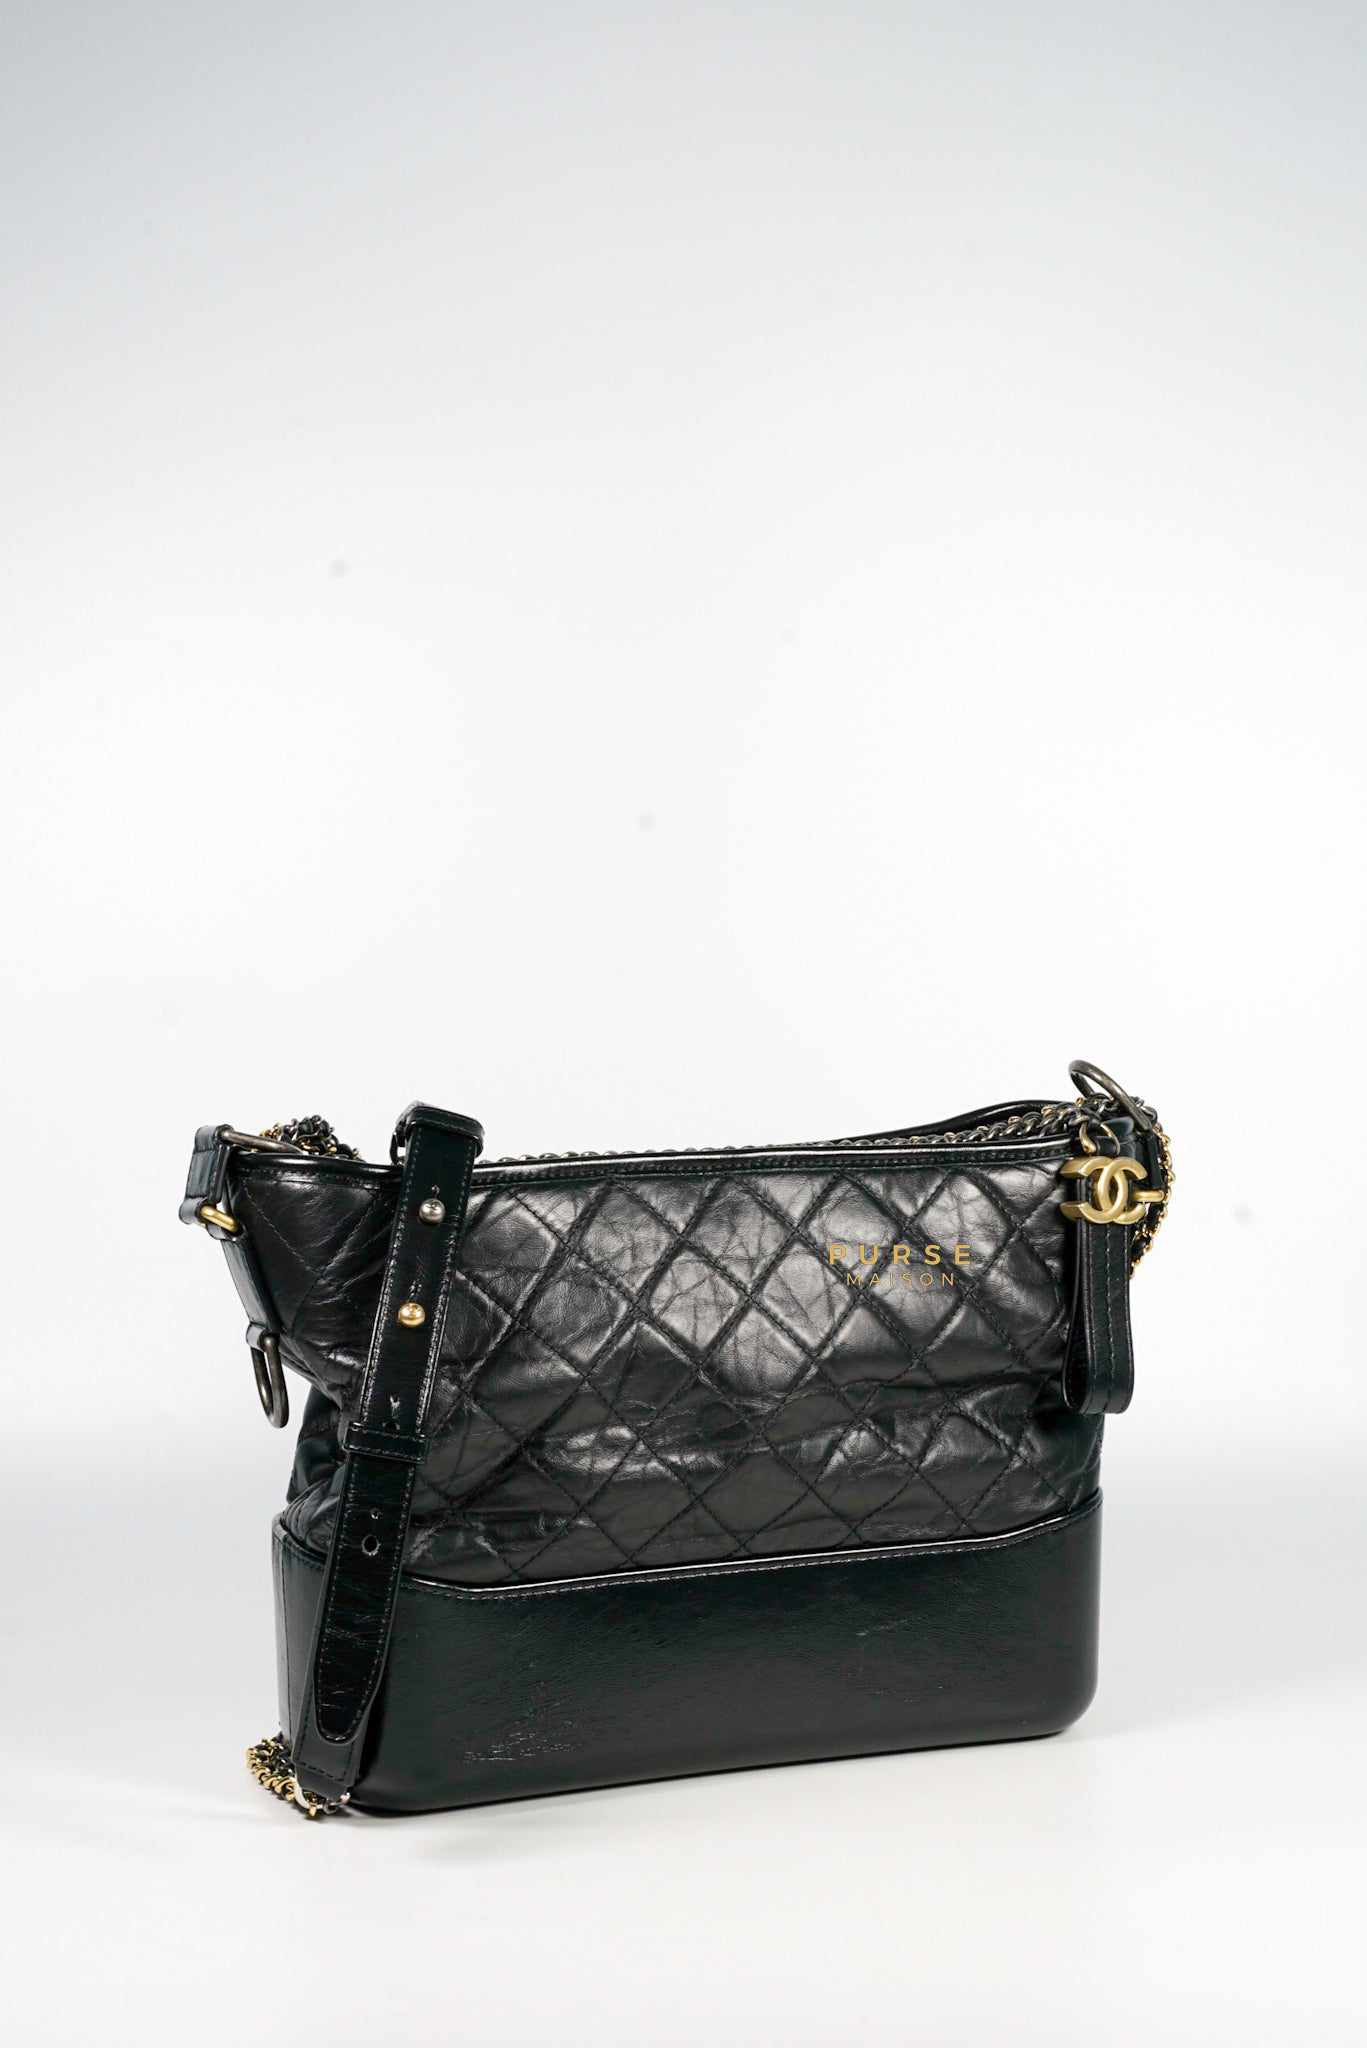 Chanel CC Filigree Medium Vanity Bag Beige/Black Caviar